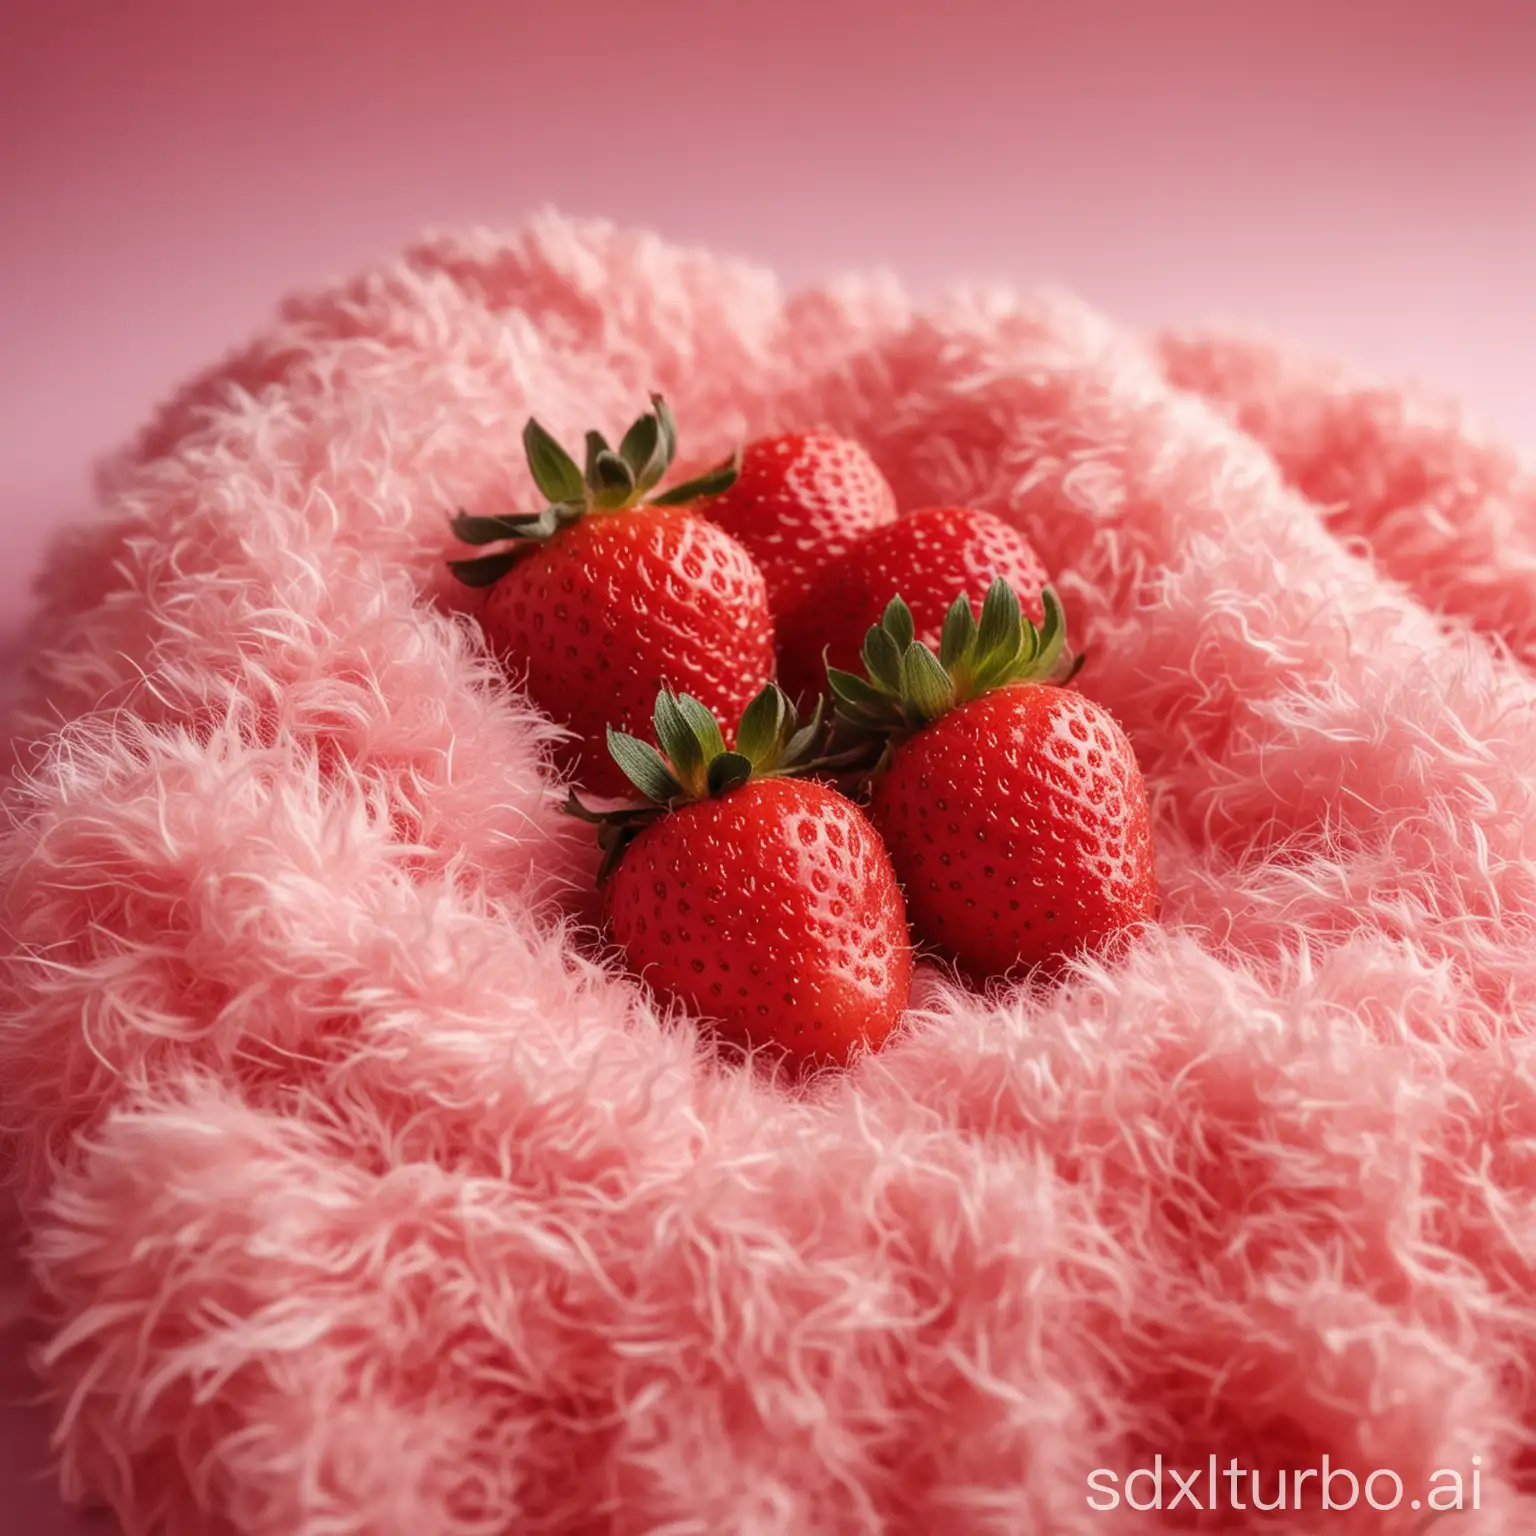 Strawberrie,fluffy,best quality, gradient, soft focus